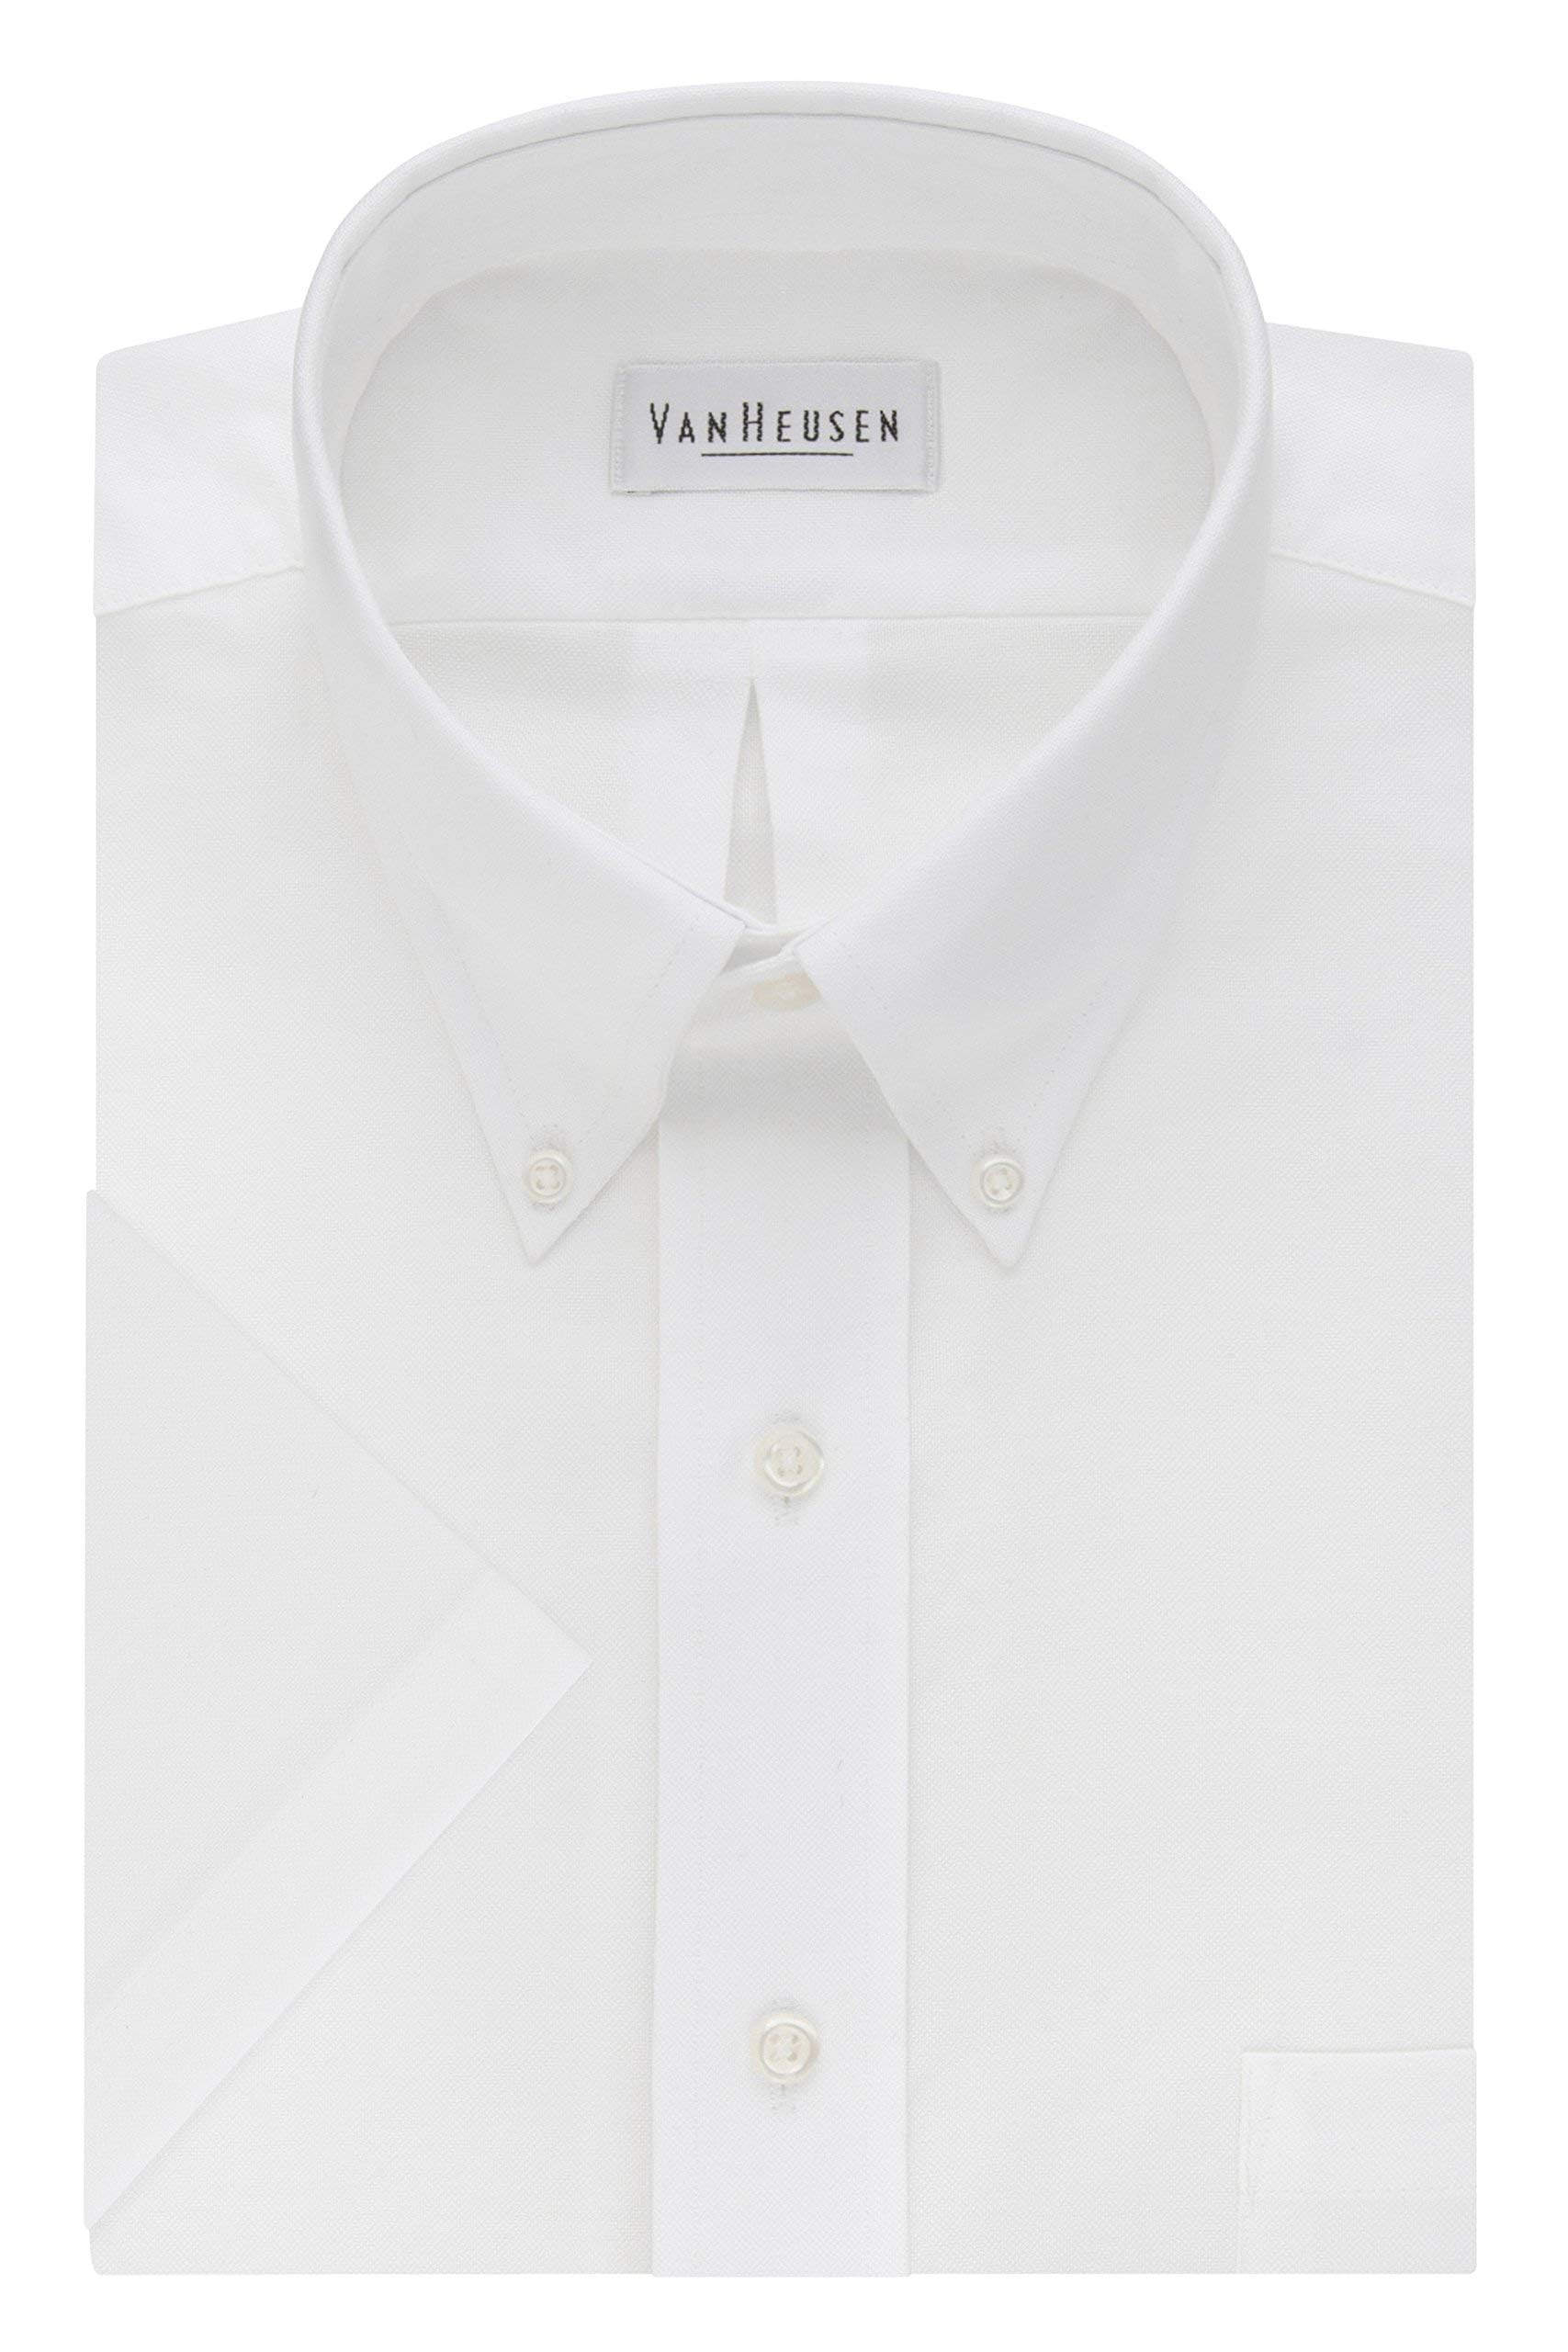 Van Heusen Men's Dress Shirt Short Sleeve Oxford Solid